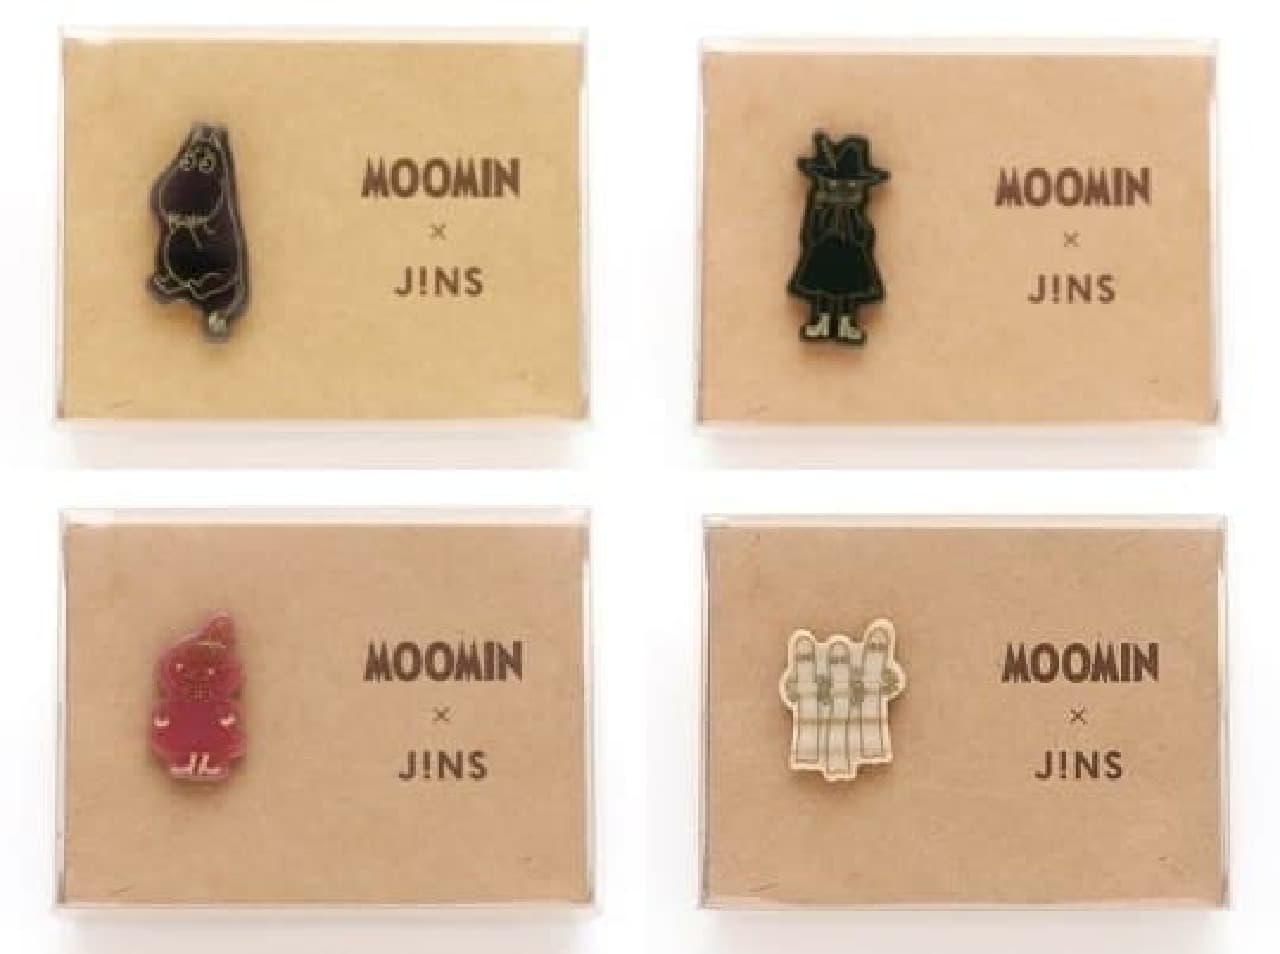 "MOOMIN x JINS" collaboration glasses